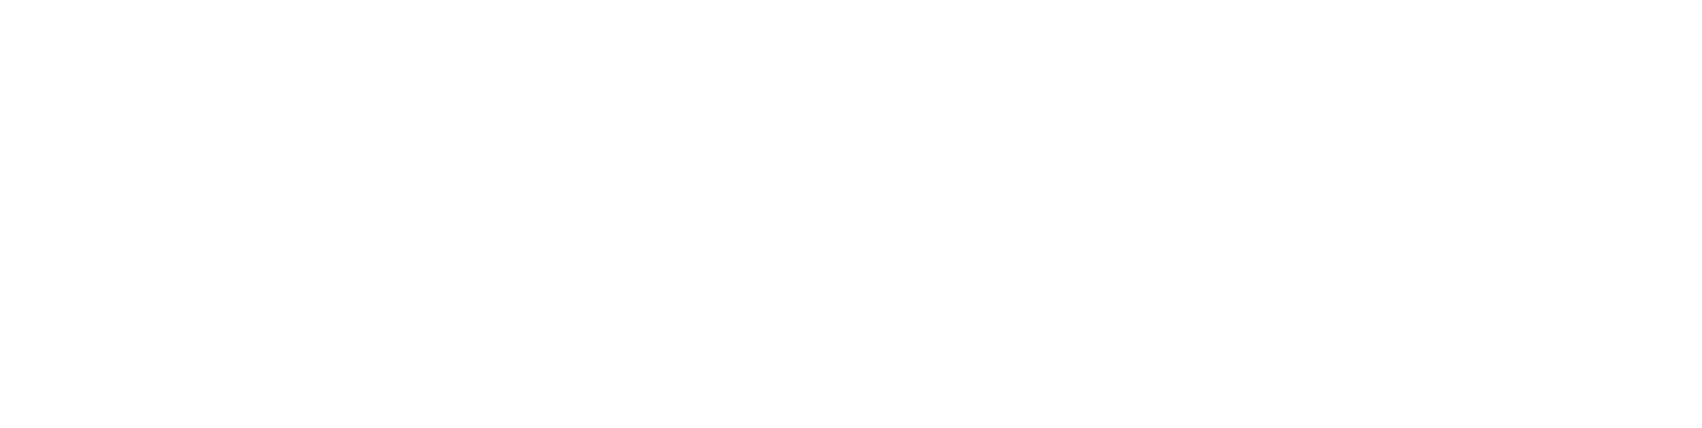 Stryker Corporation Logo groß für dunkle Hintergründe (transparentes PNG)